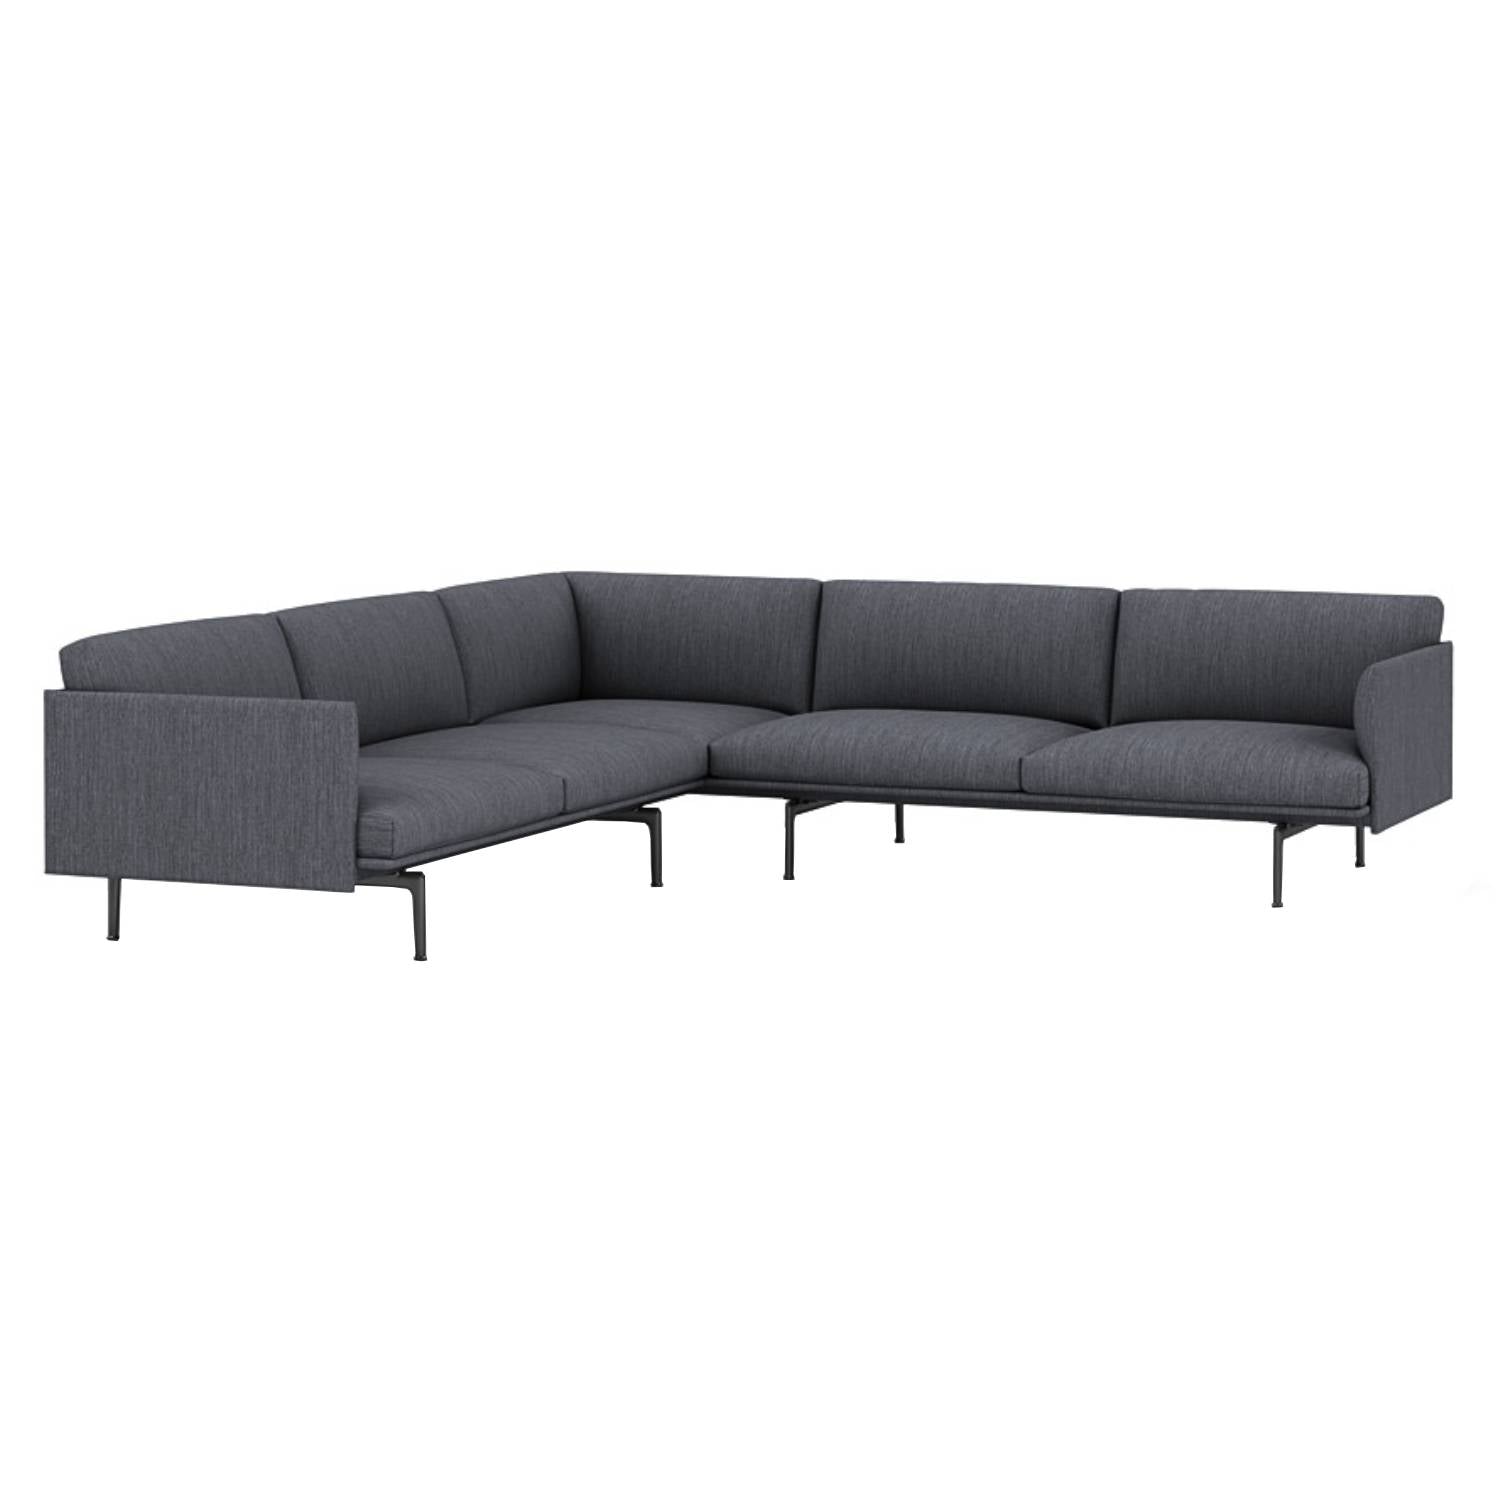 Outline Corner Sofa: Black